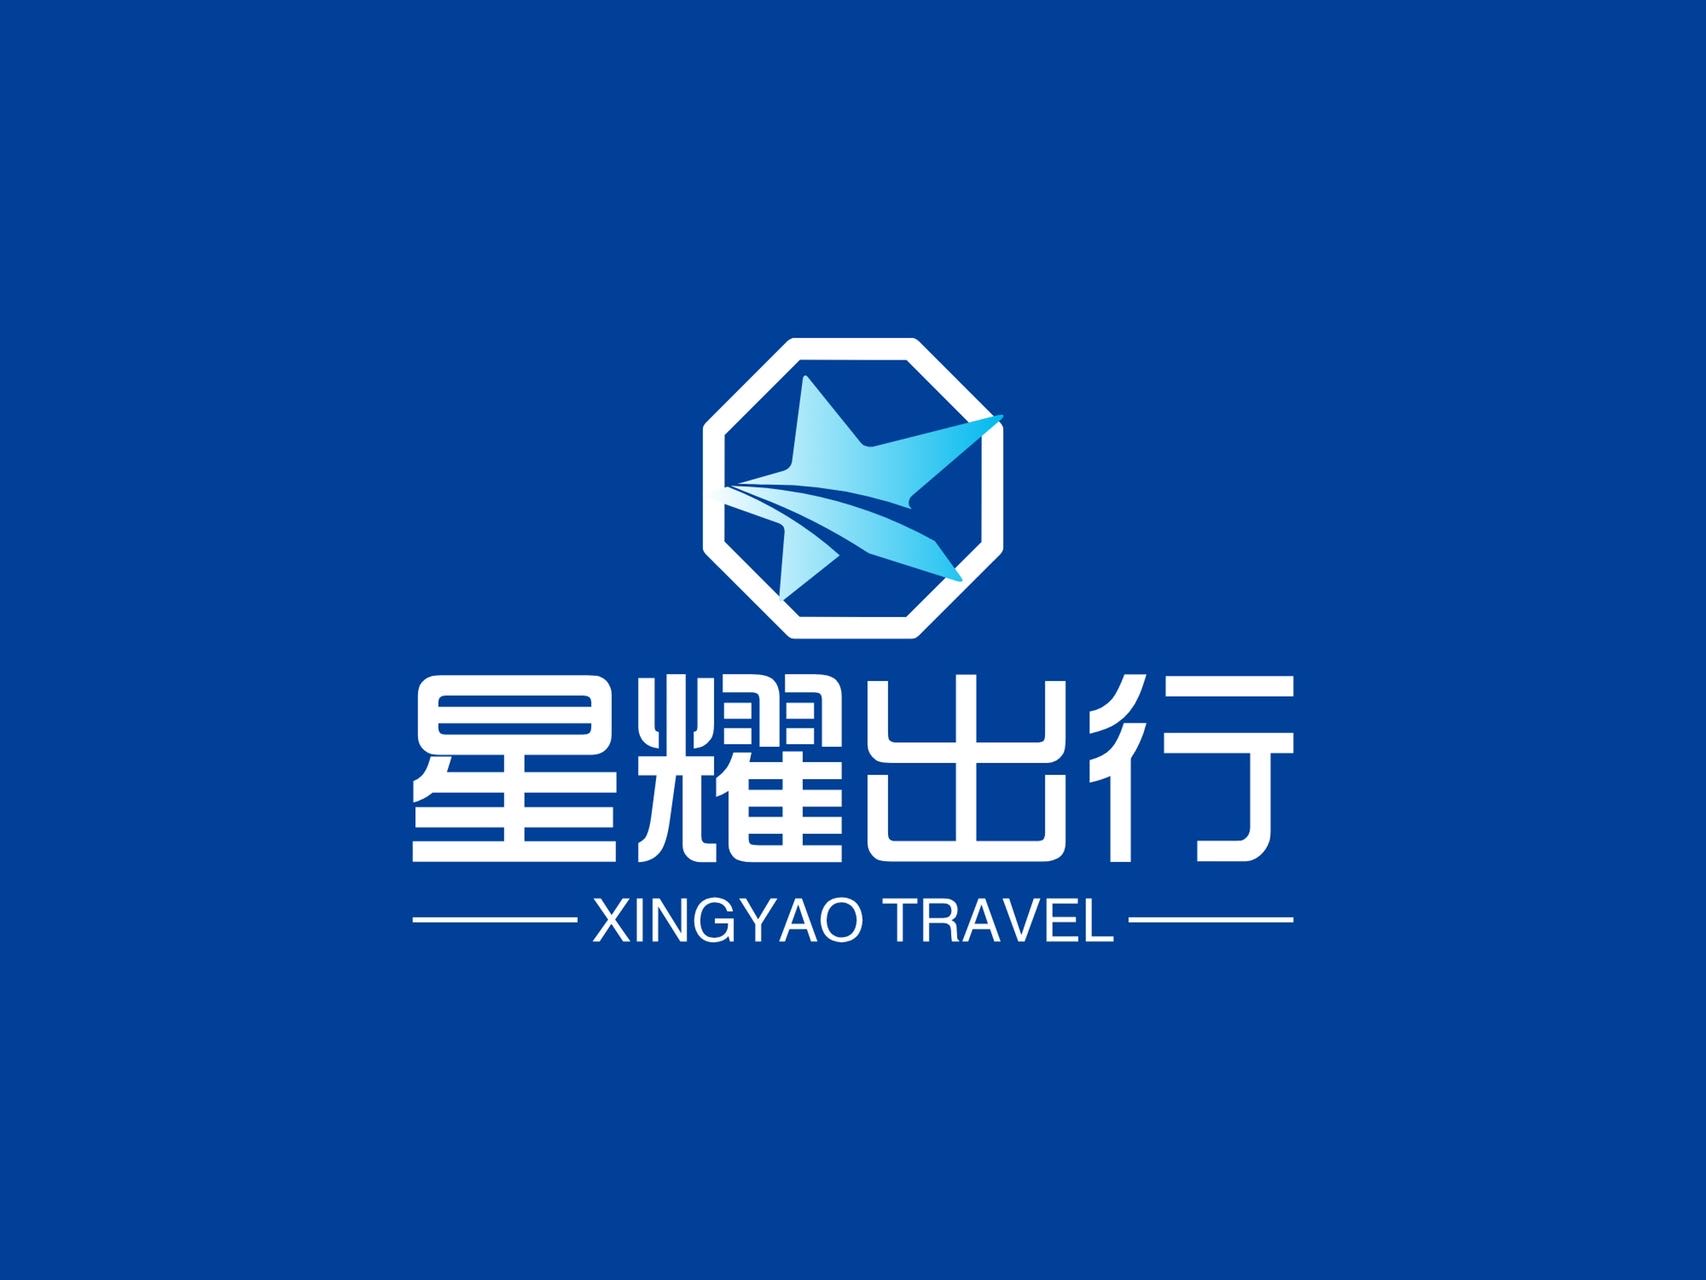 https://static.zhaoguang.com/image/2022/5/12/Oo1EPQ2EXOKHwAbbIvl1.jpg